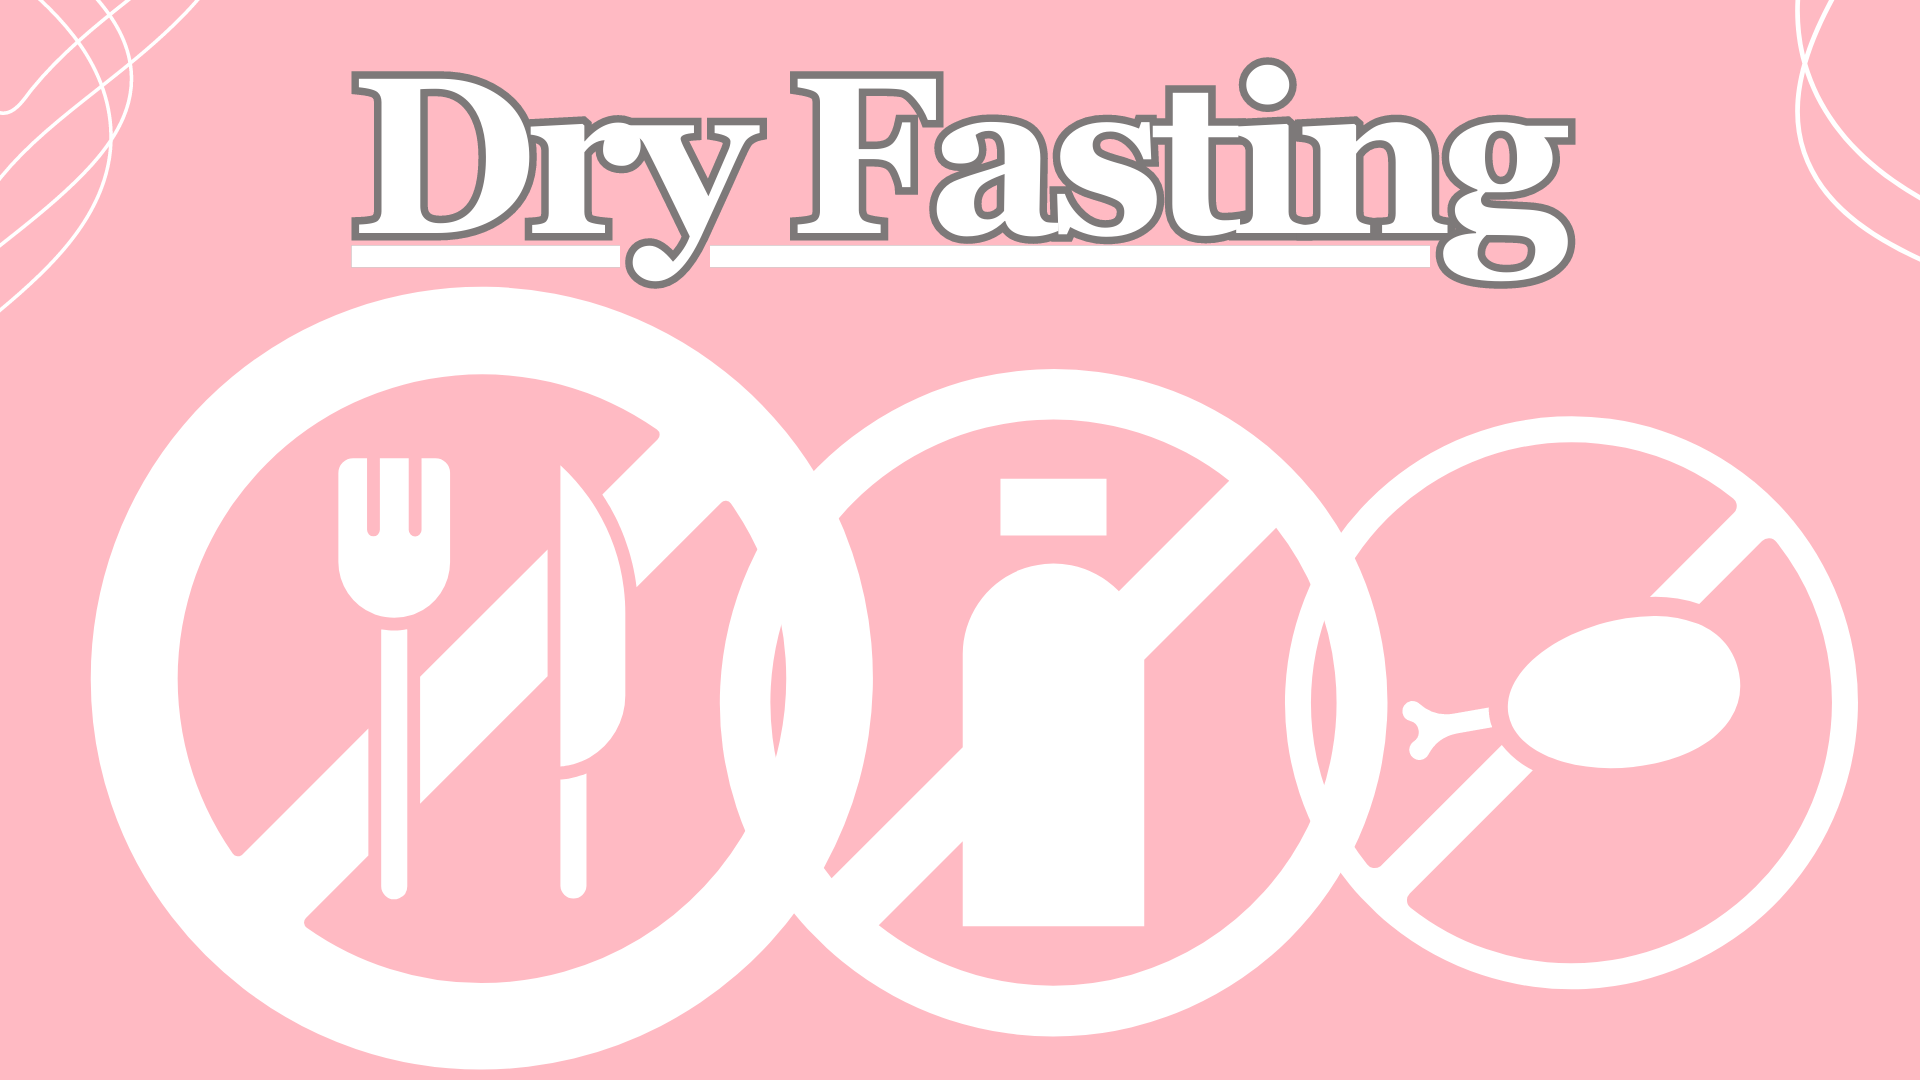 Dry Fasting